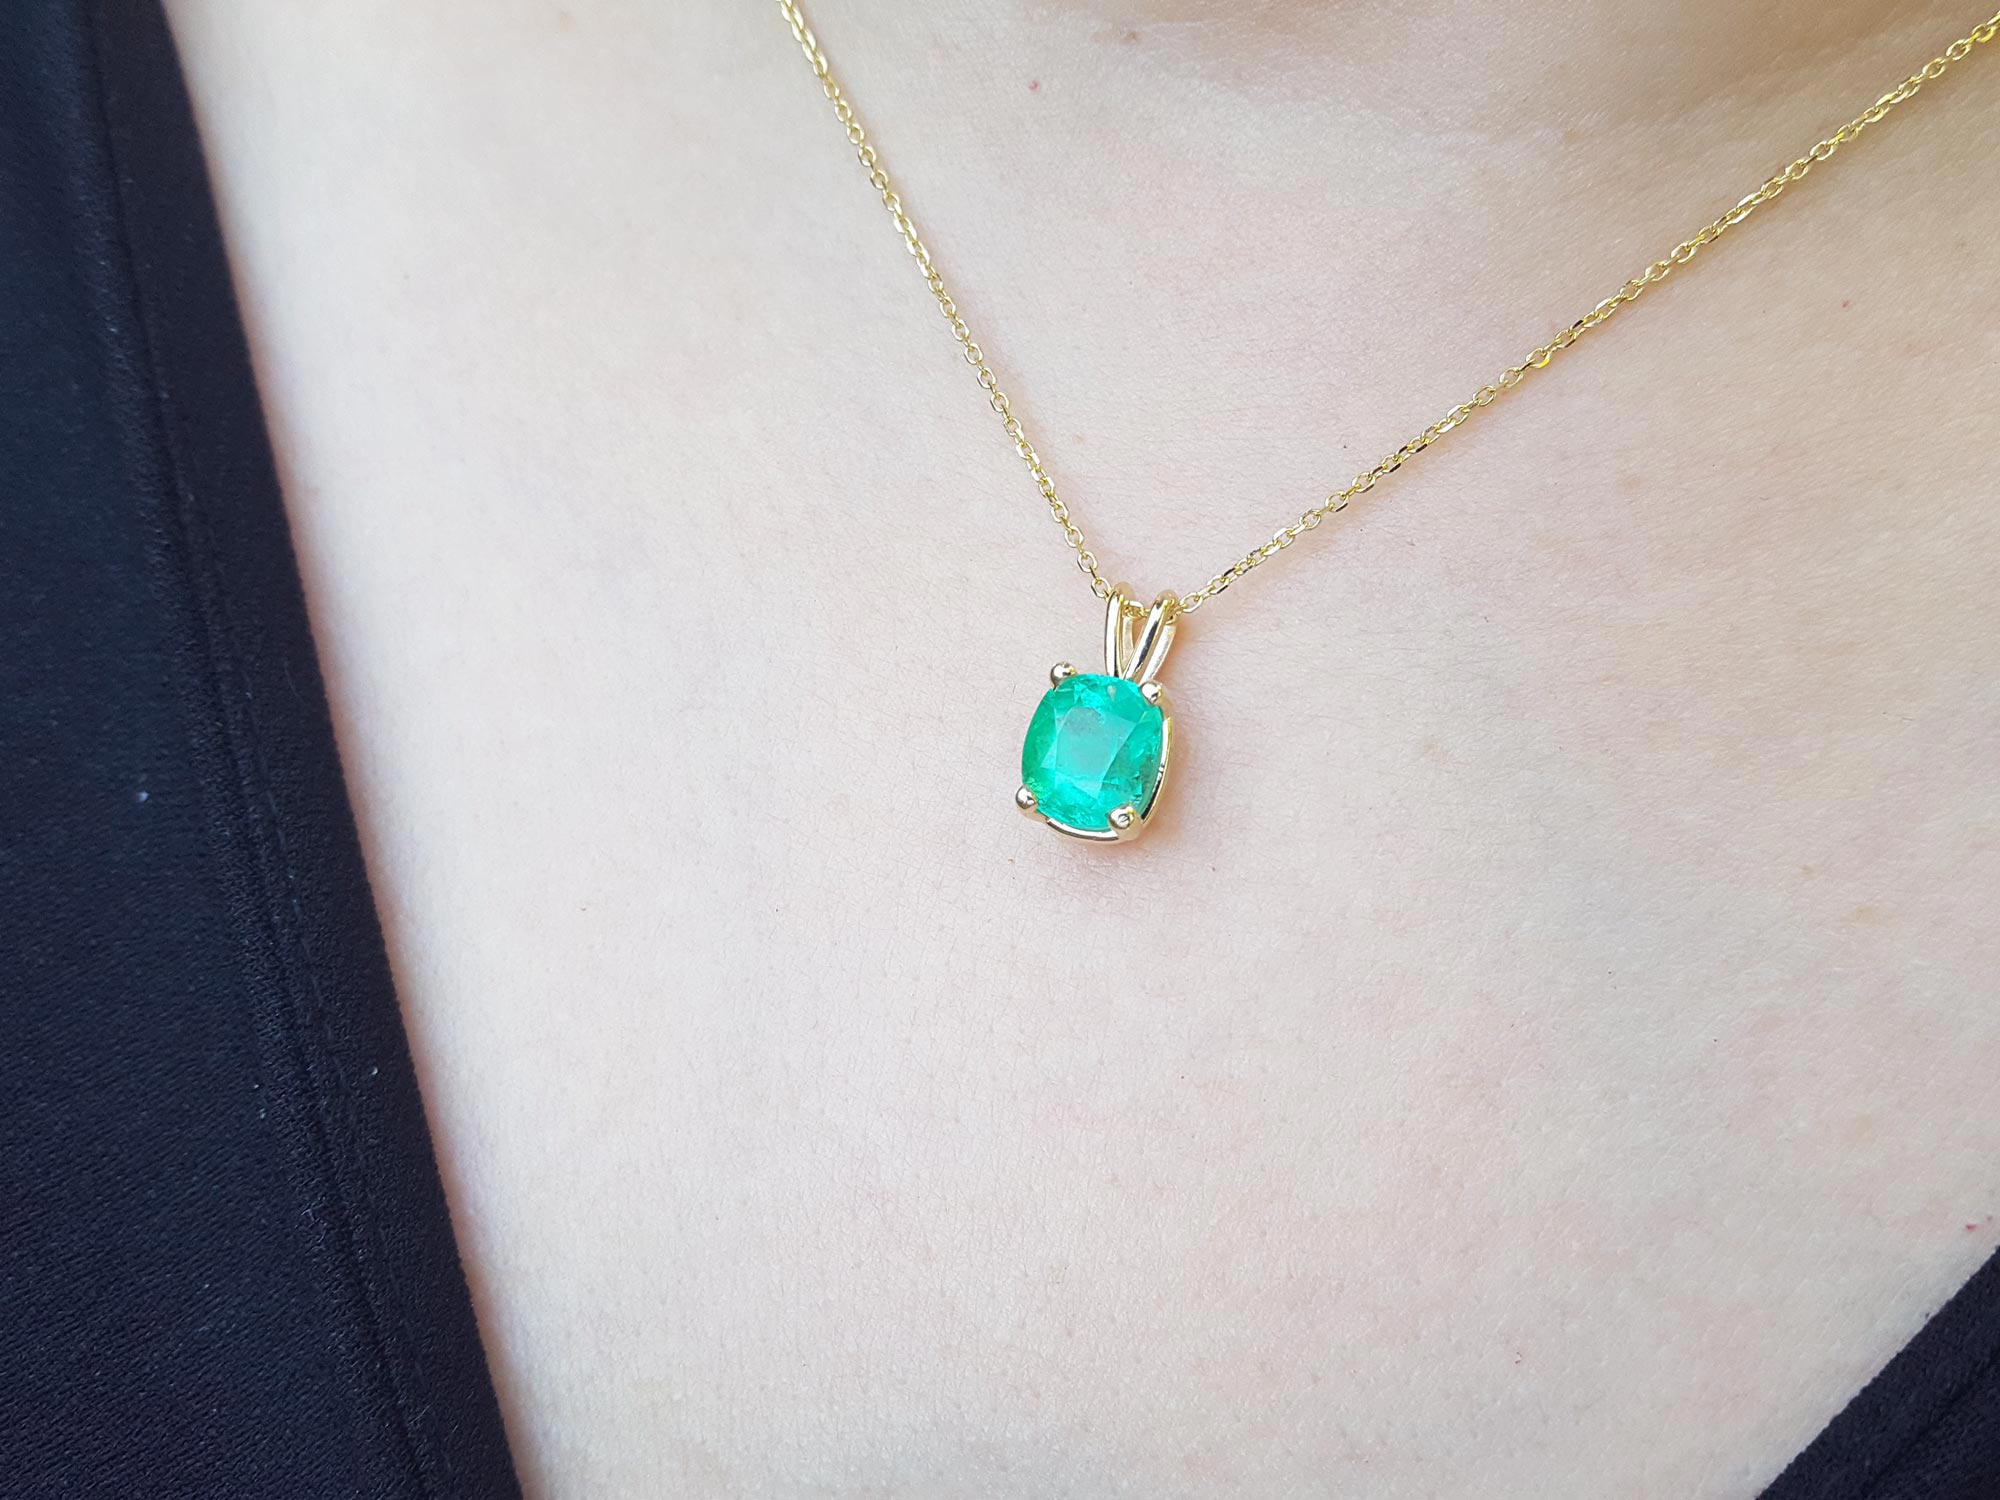 Authentic Colombian emerald pendant